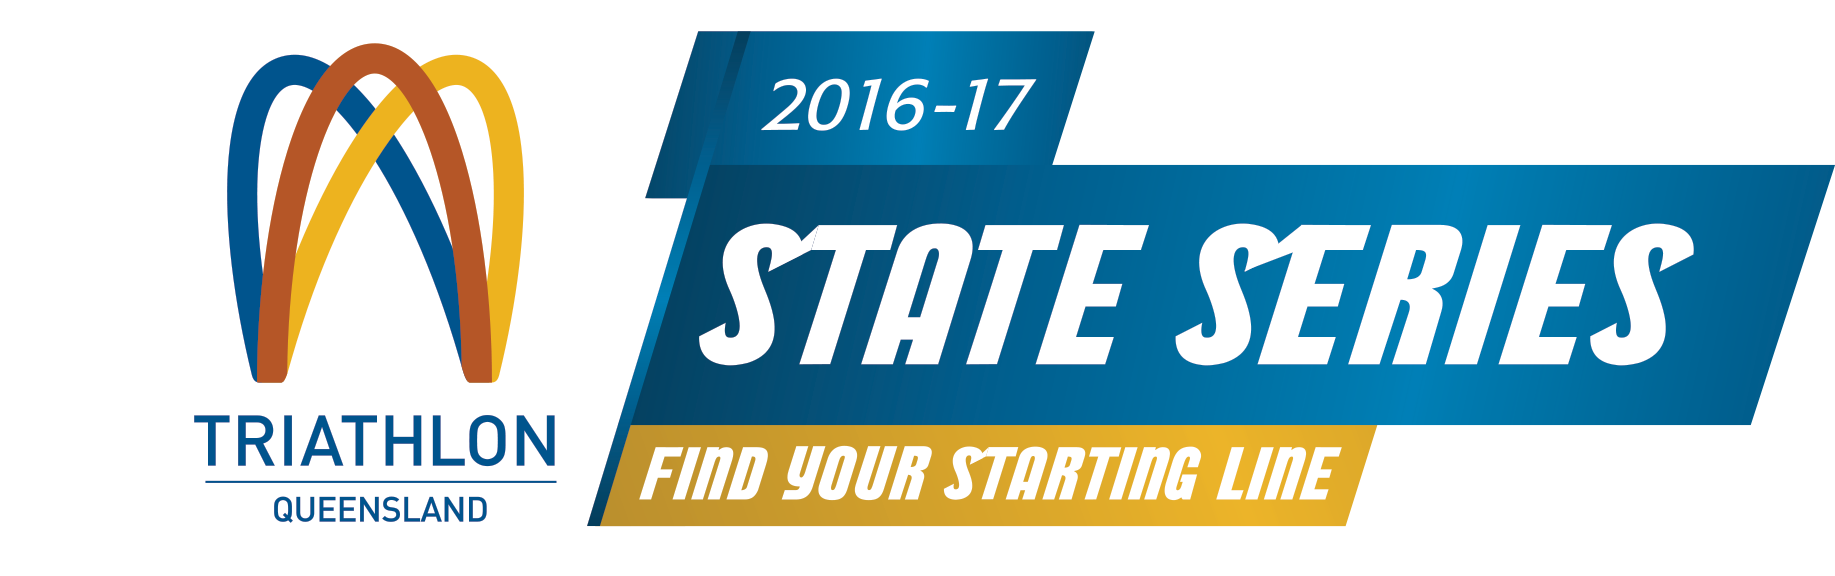 State Series Logo Find Your Starting Line - Triathlon Australia (1835x576), Png Download